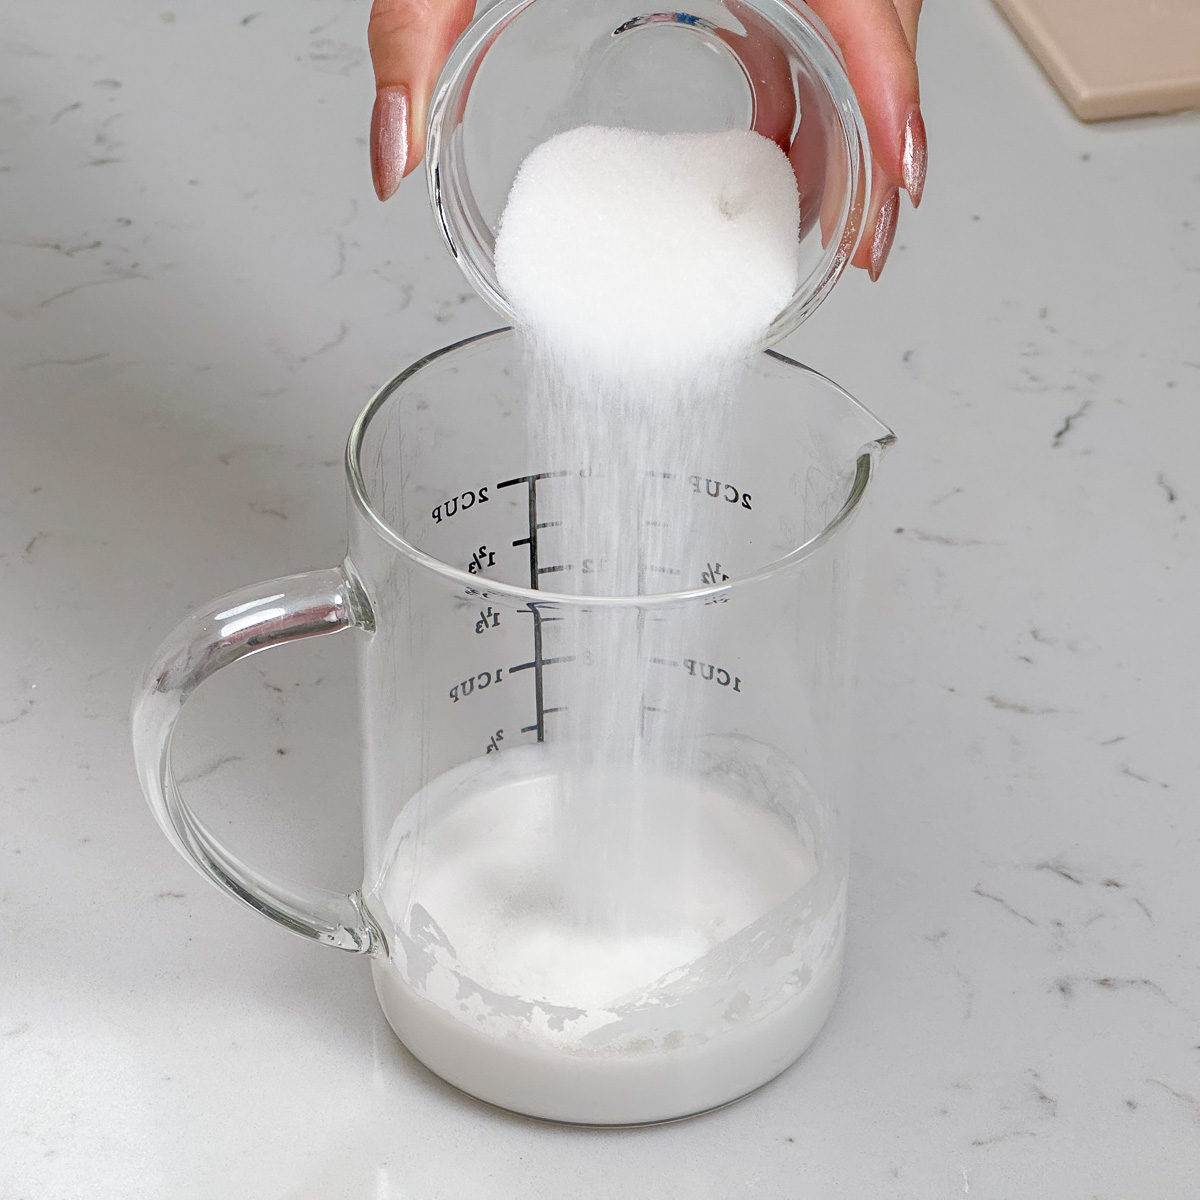 Add sugar to the coconut milk to sweeten it.